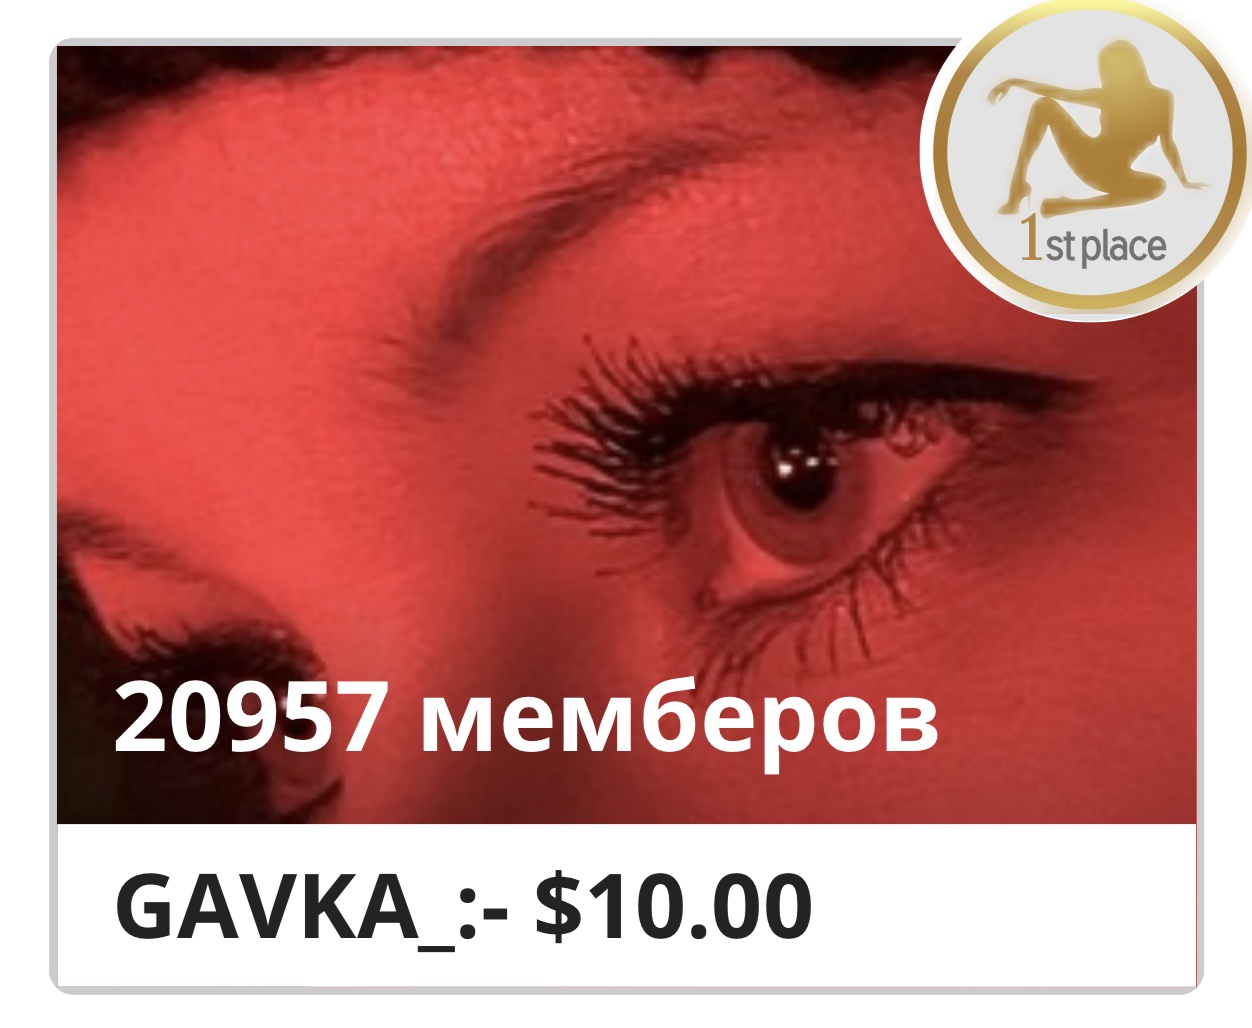 GAVKA_ GAVKA image: 1